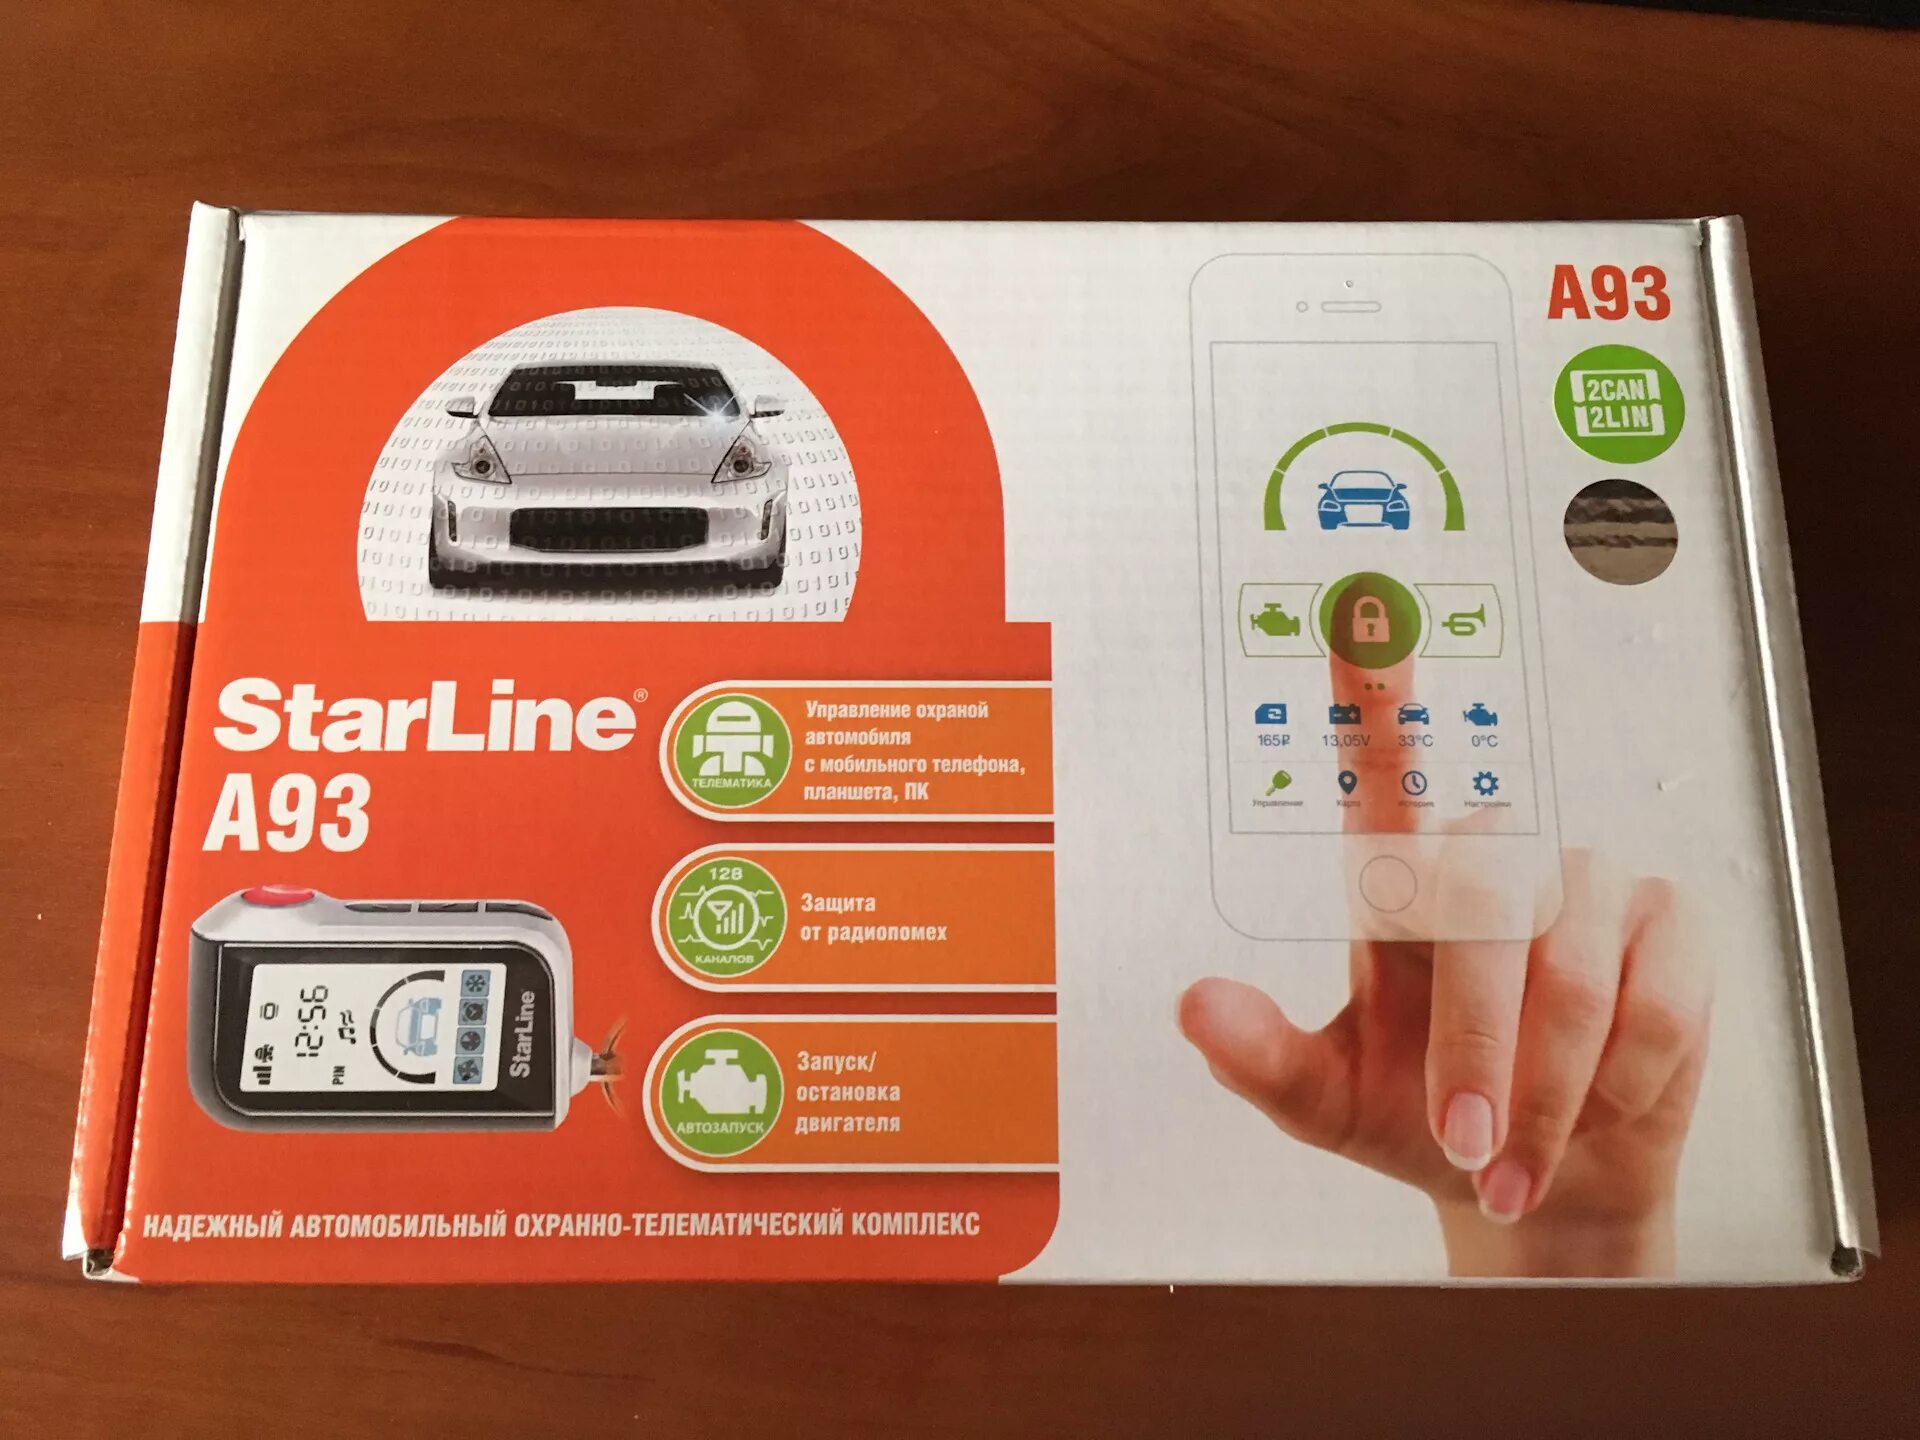 А 93 gsm. STARLINE a93 GSM. GSM модуль STARLINE a93. Старлайн управление с телефона. Охранно-телематическая система STARLINE a93 2can+Lin с аз a93.